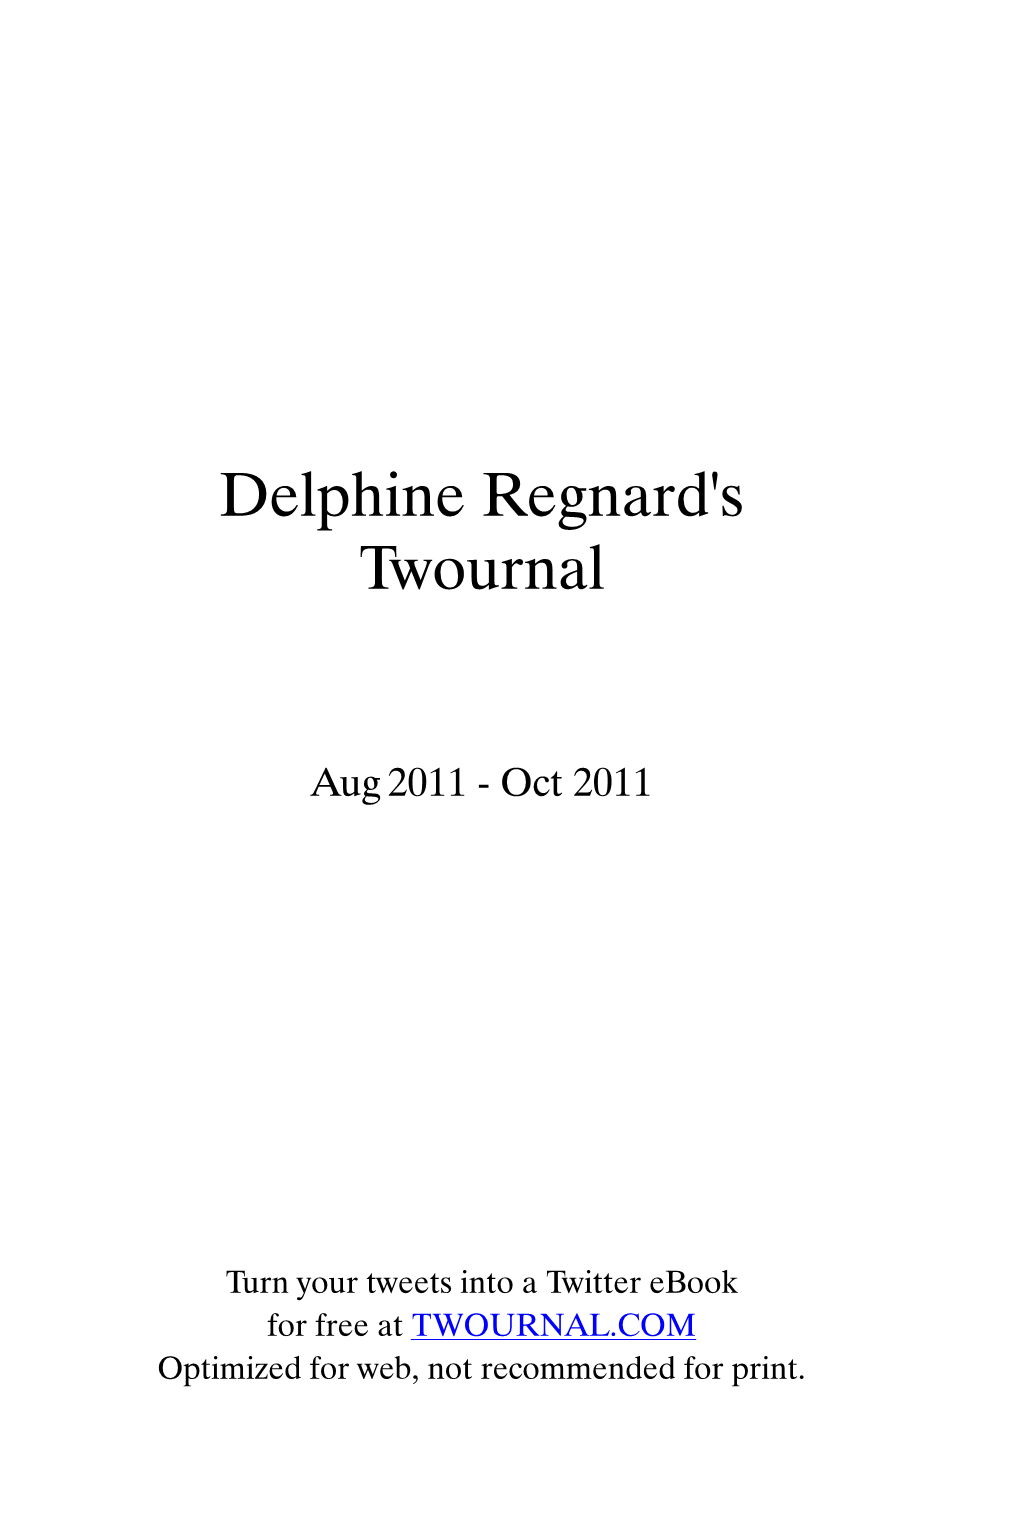 Delphine Regnard's Twournal